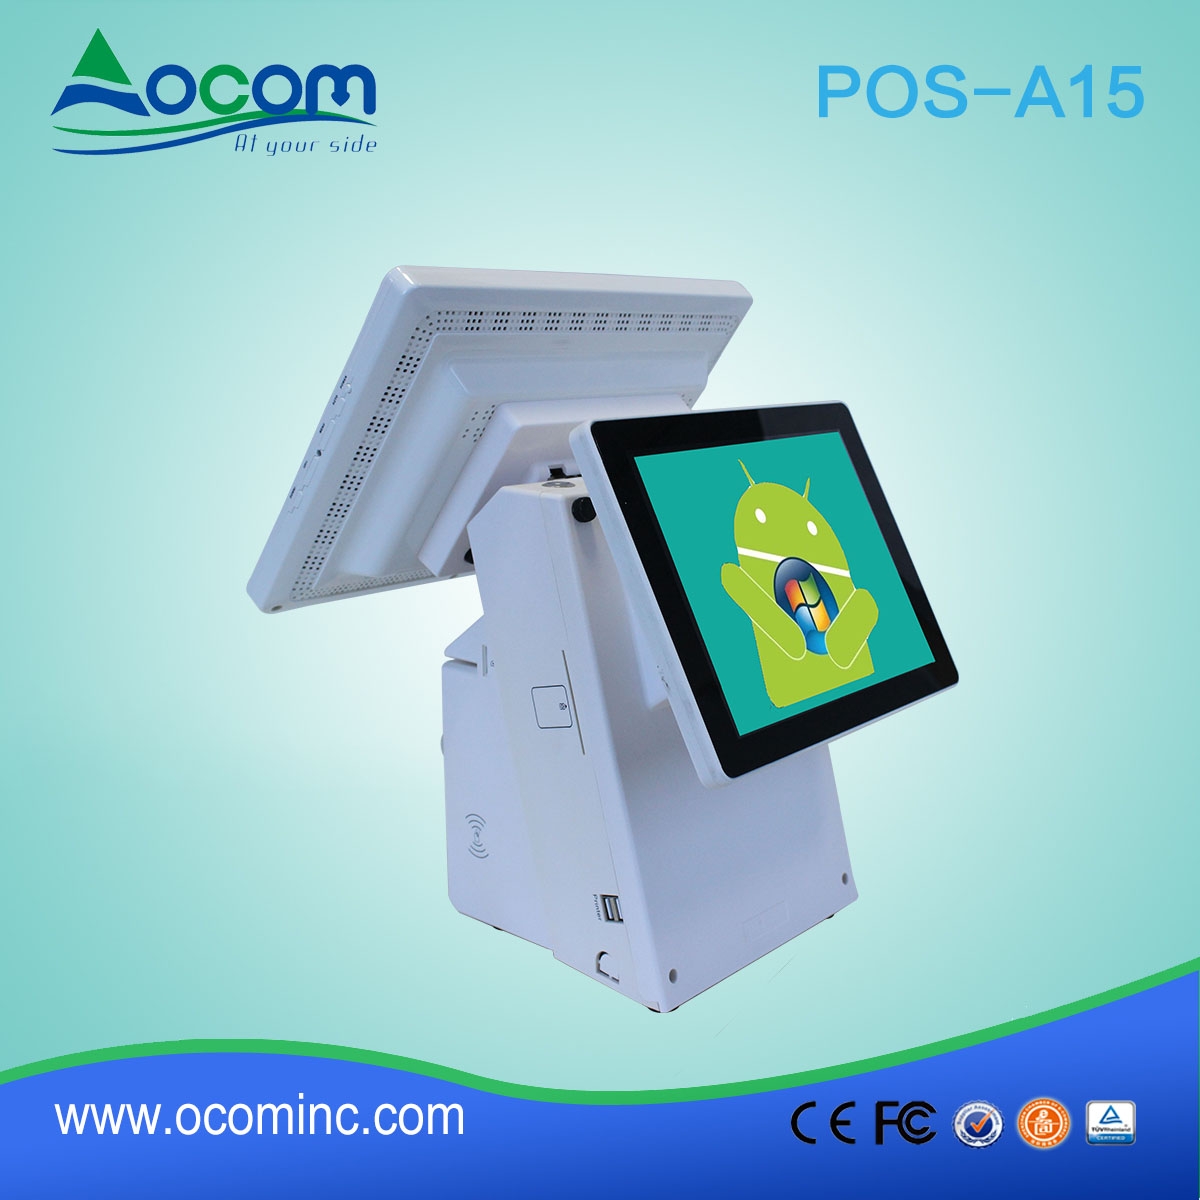 (POS-A15) Neues Modell mit integriertem Thermodrucker Touch Screen POS-Maschine